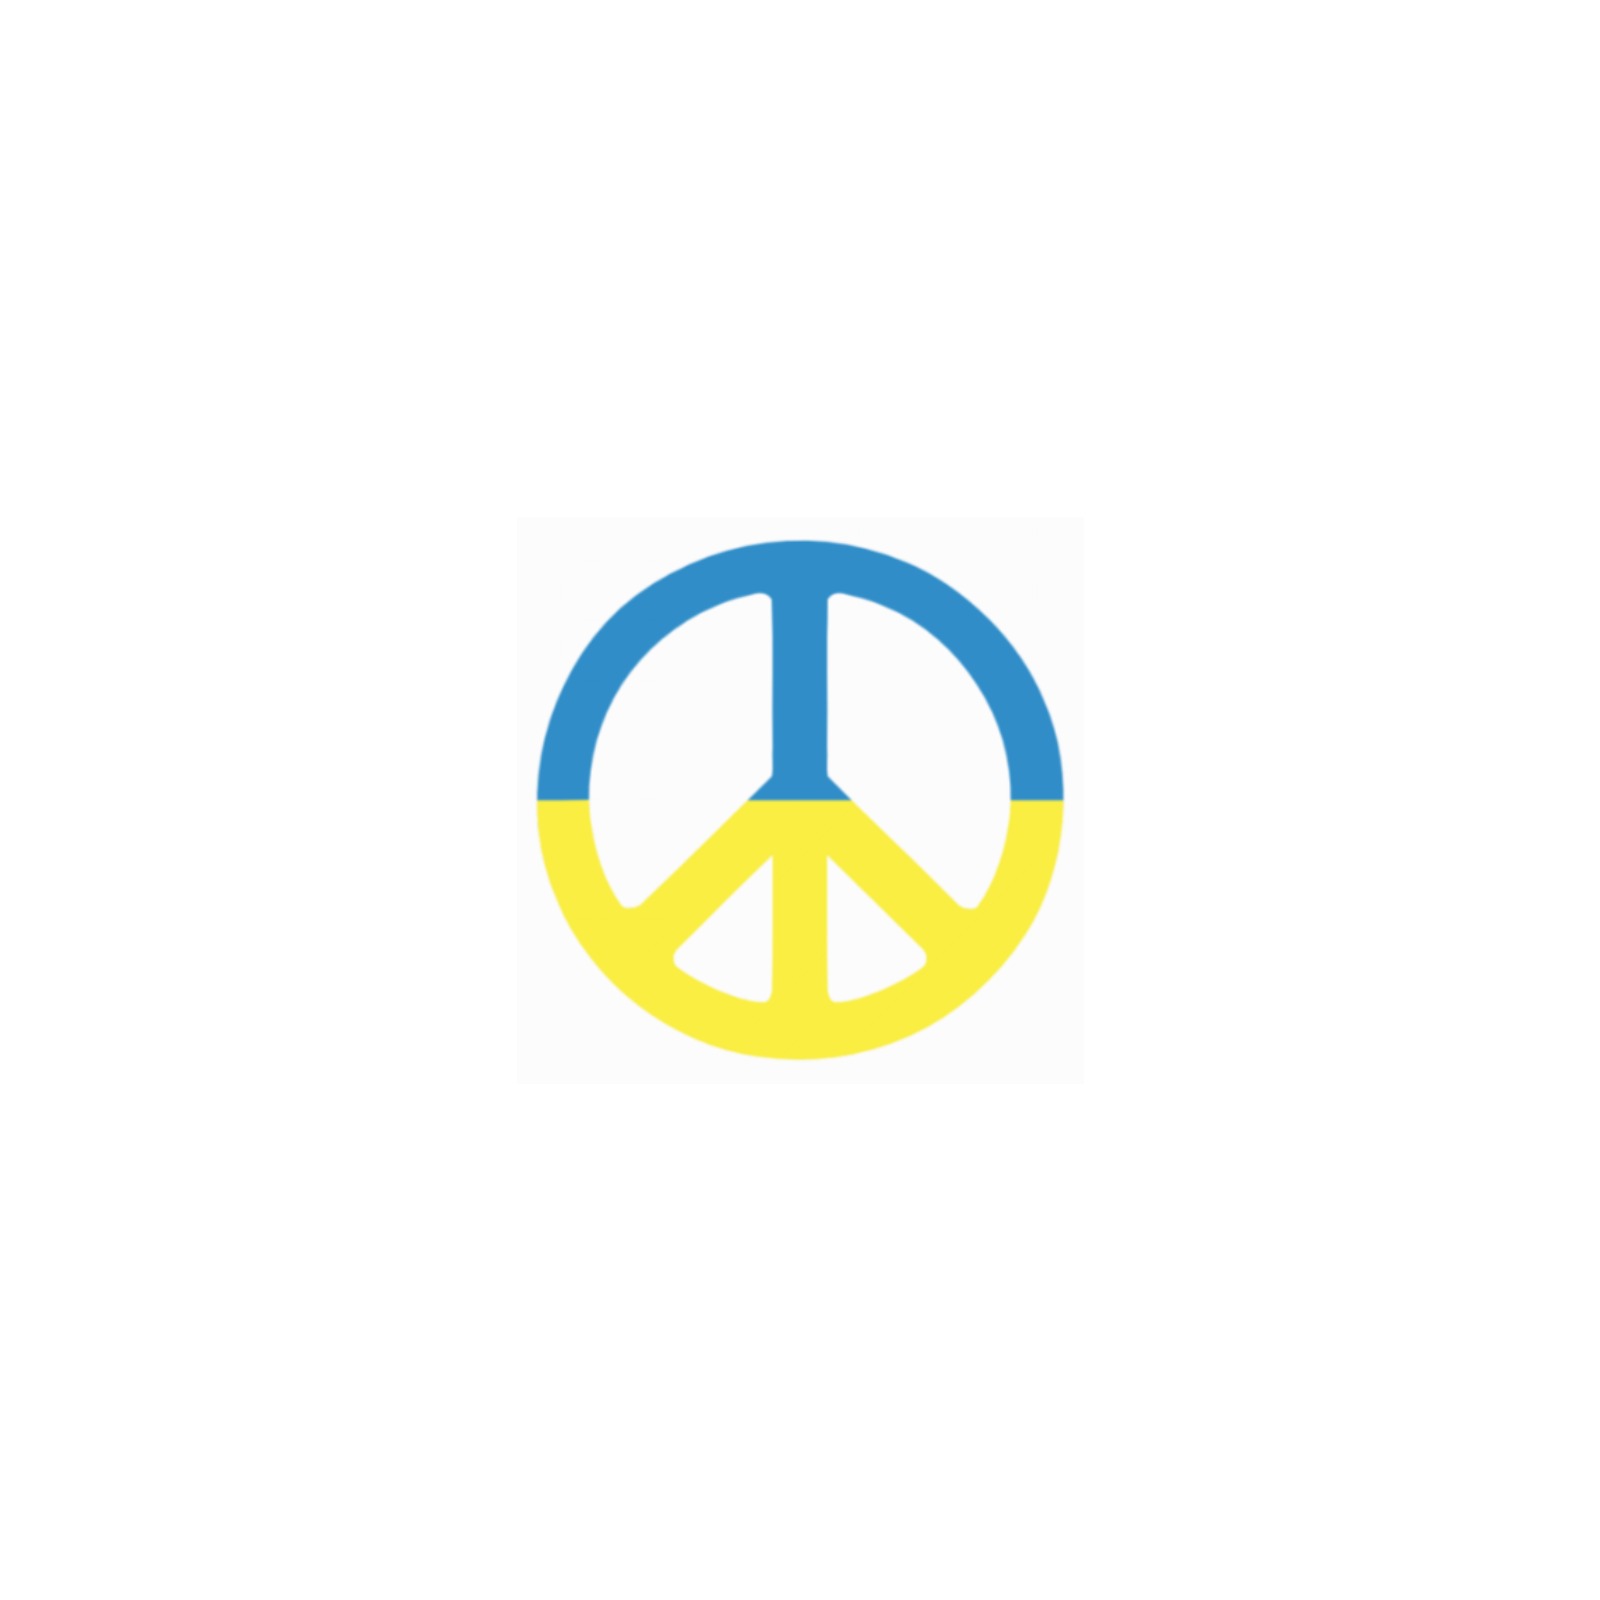 Ukraine Peace Symbol Personalized Temporary Tattoo (15 Pieces)